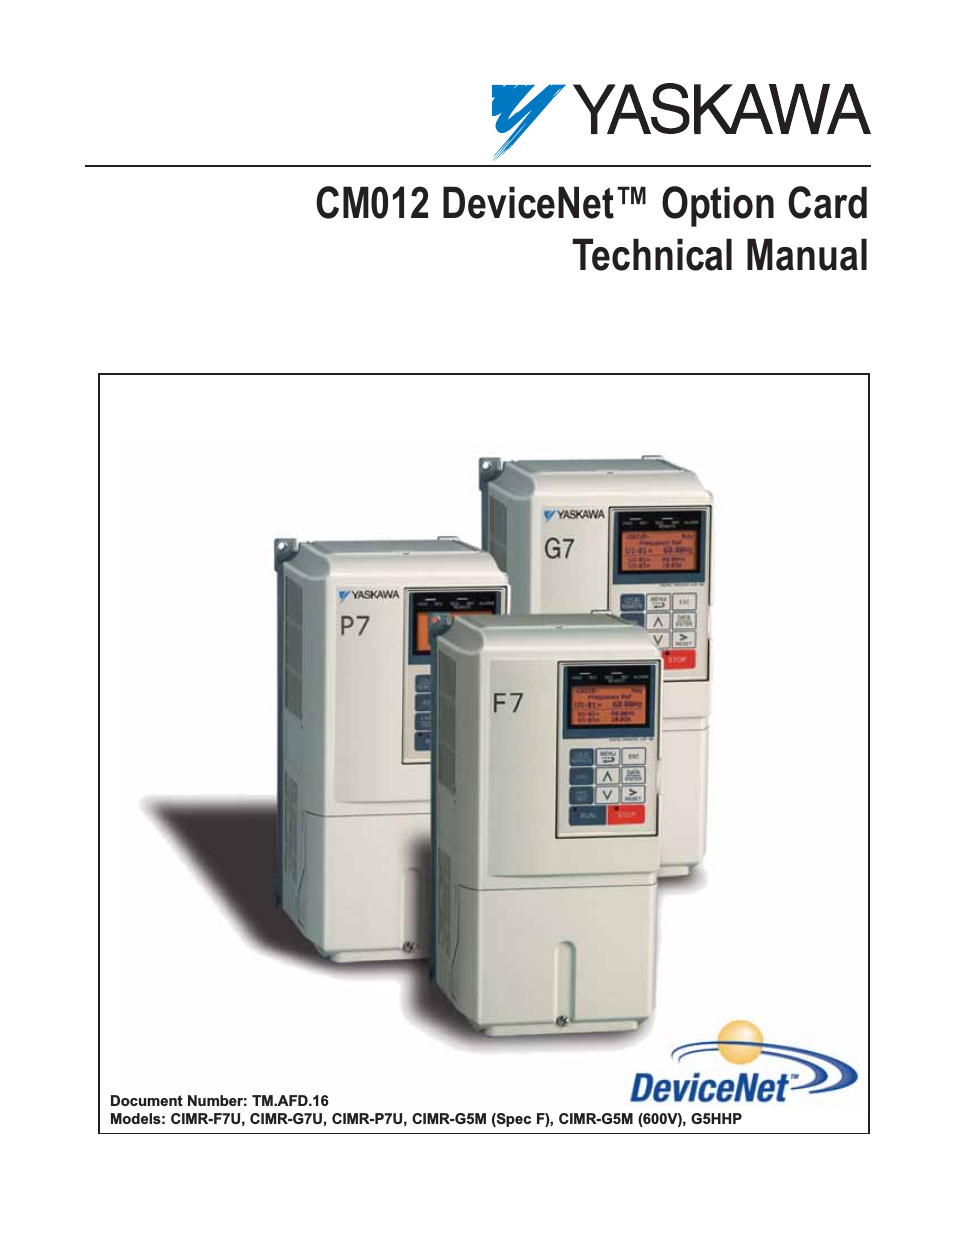 CM012 DeviceNet Option Card